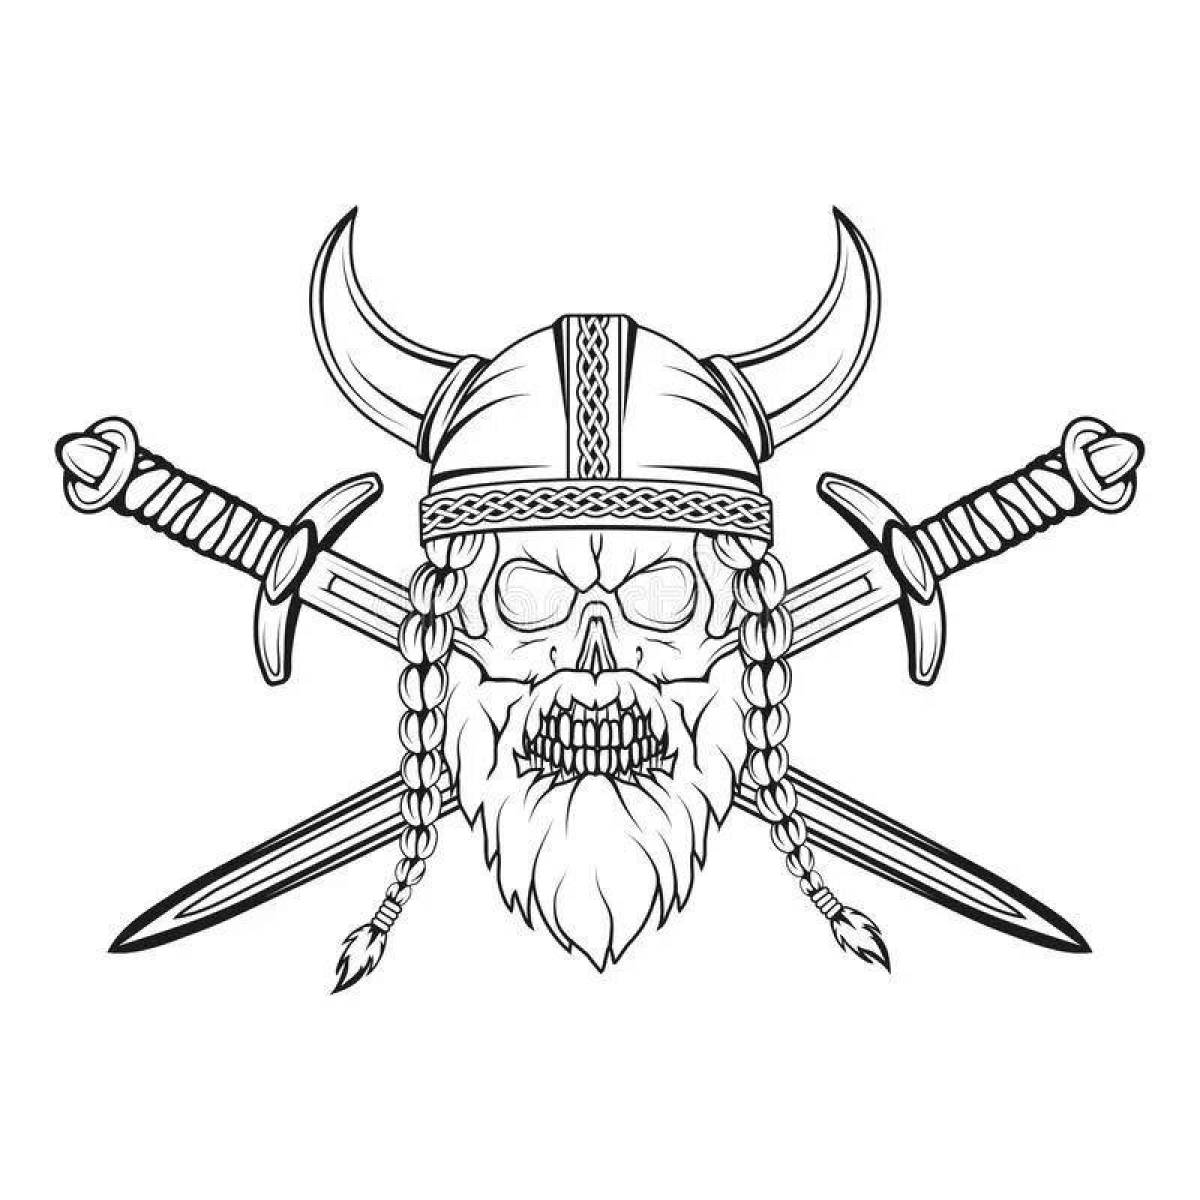 Viking continuous battle coloring page